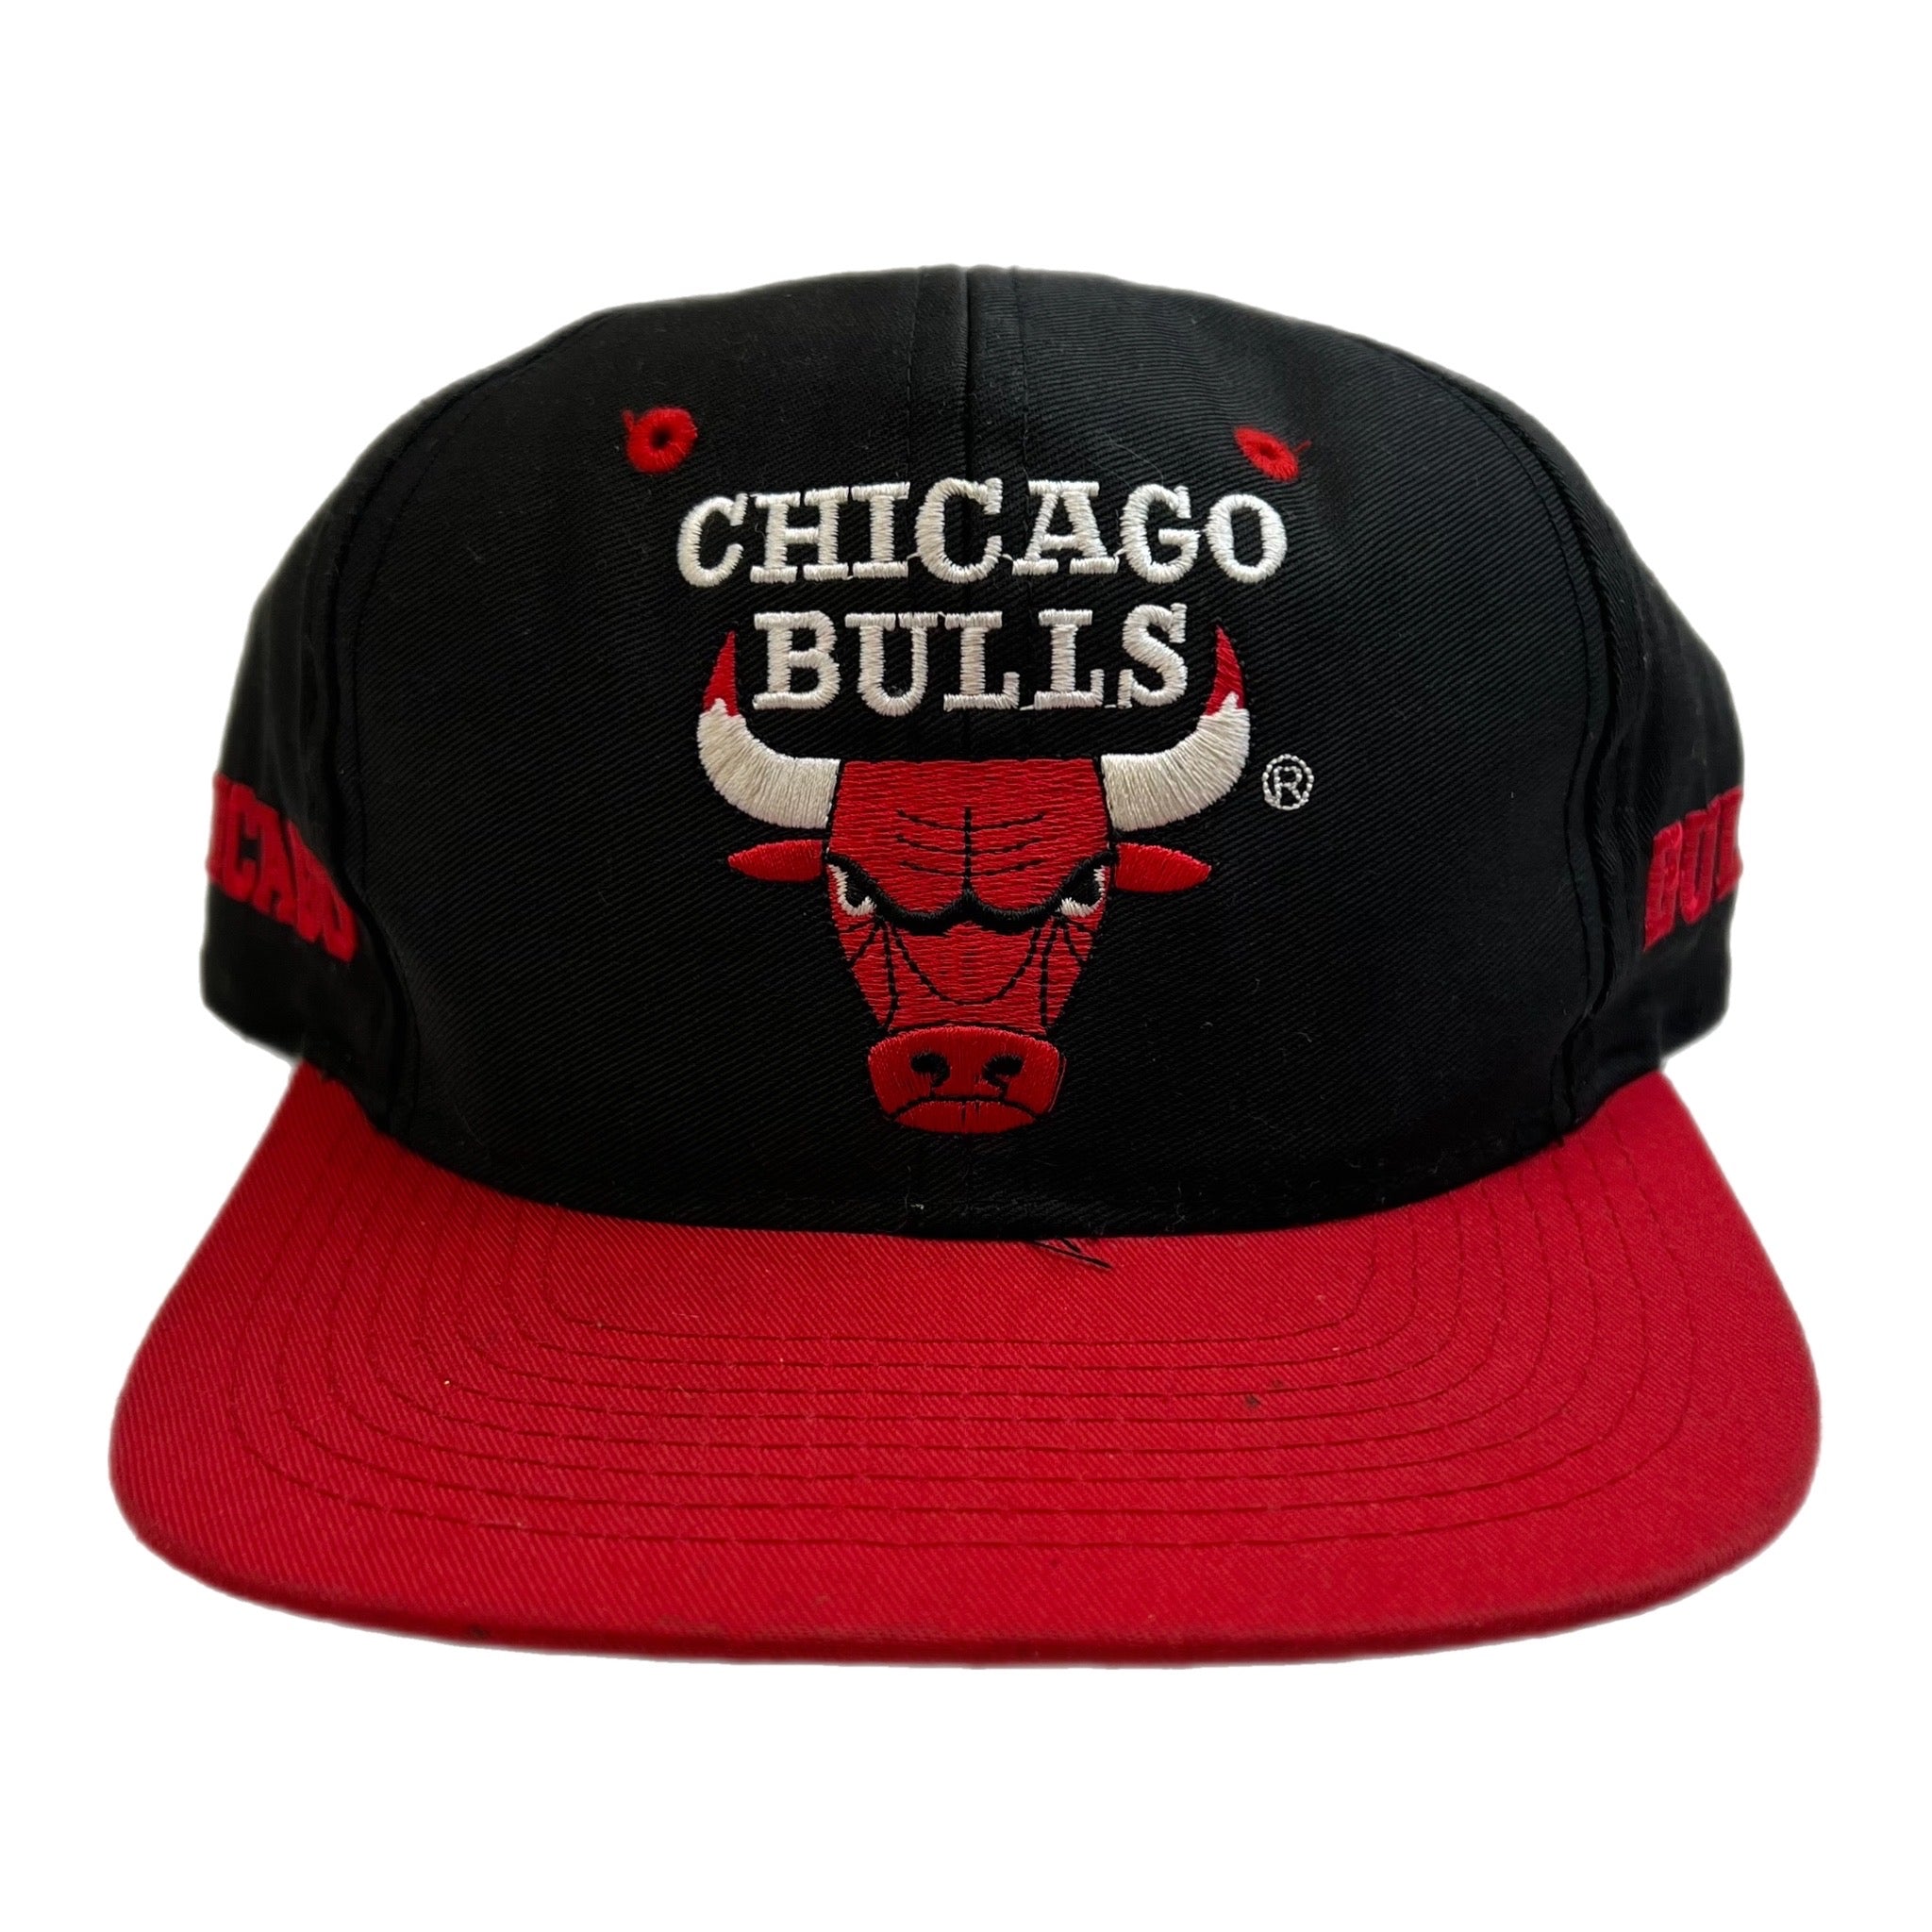 Vintage Competitor Chicago Bulls Hat